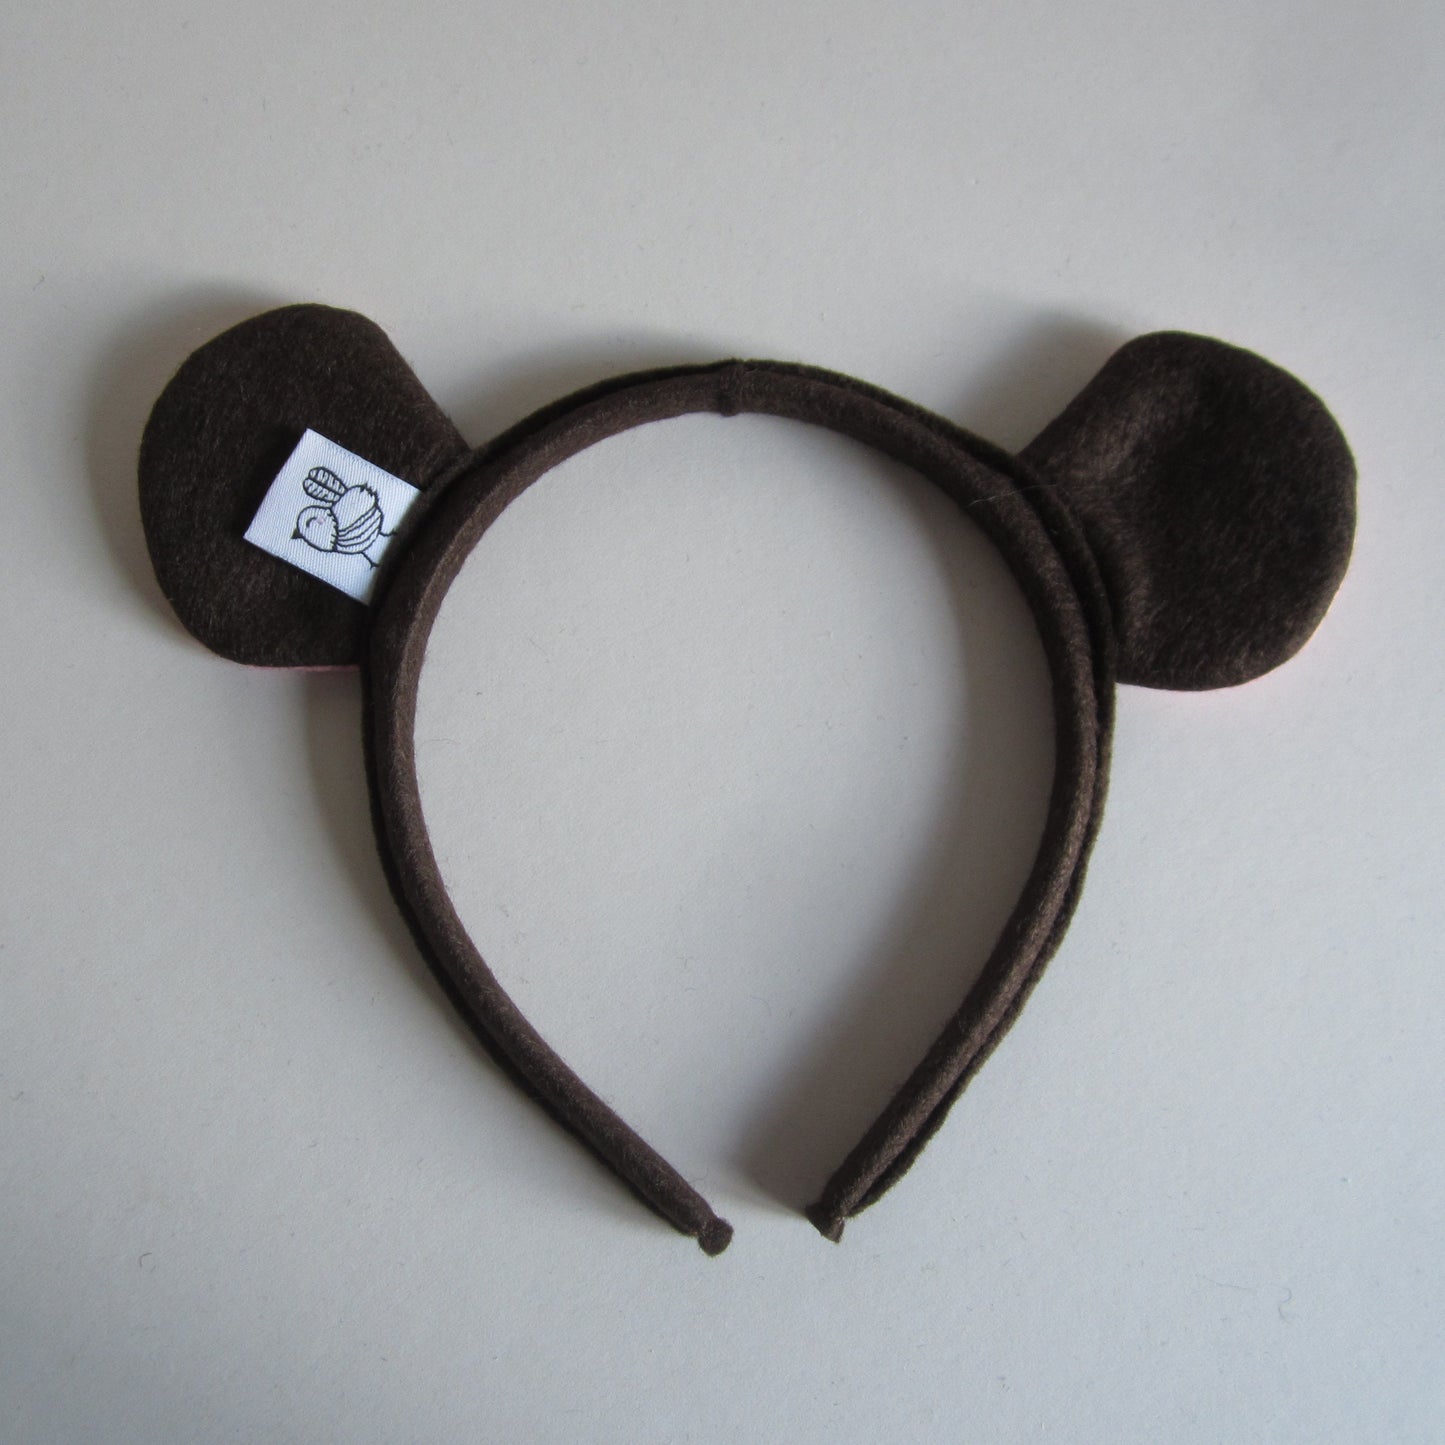 Mouse Ears Hairband Made of Dark Brown Felt